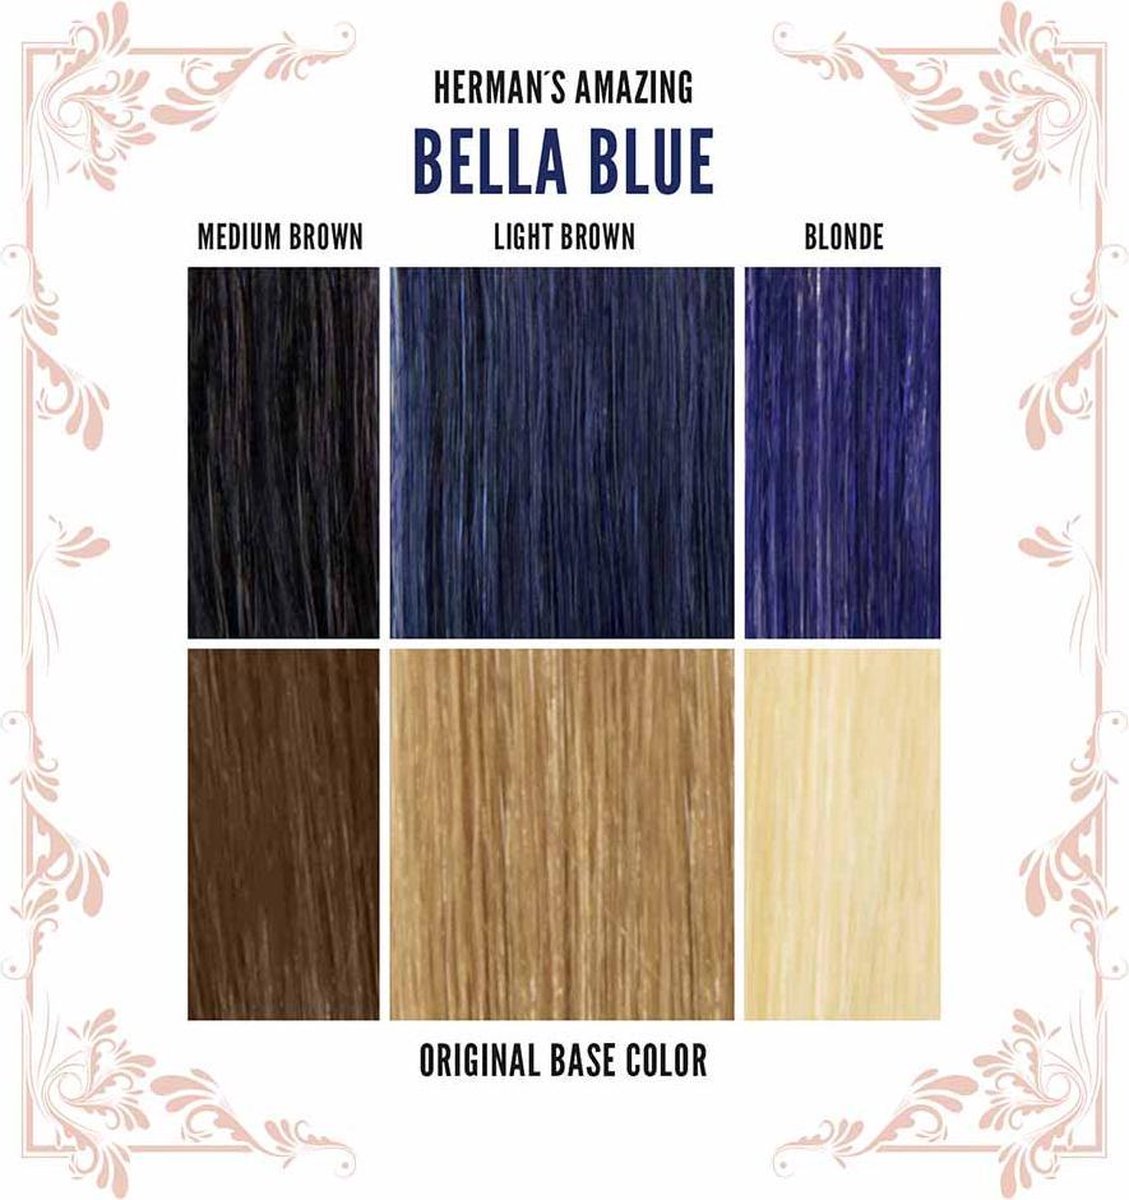 Hermans Amazing Haircolor - Bella Blue Semi permanente haarverf - Blauw